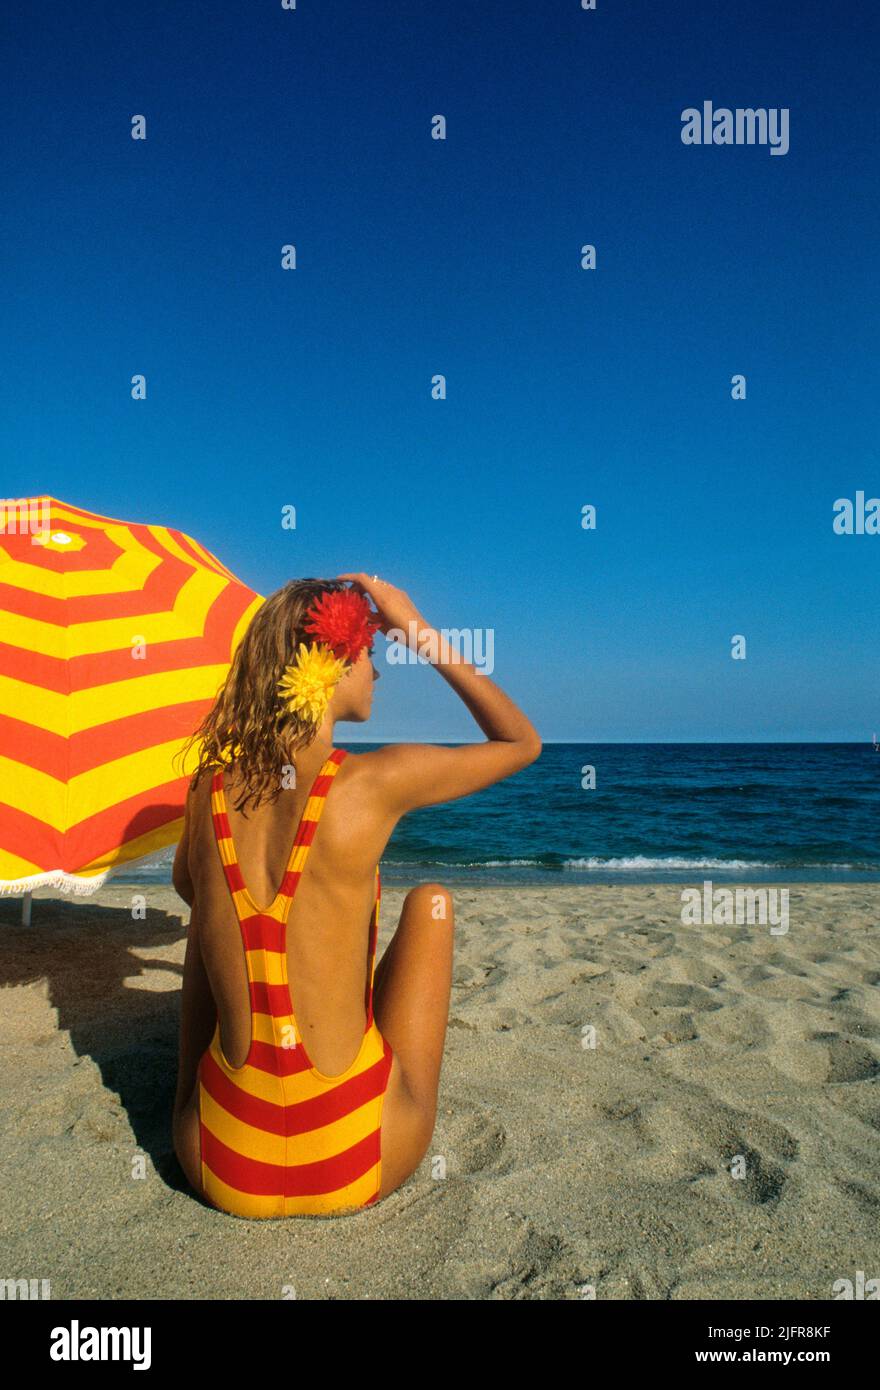 BEAUTY SUMMER BEACH Stock Photo